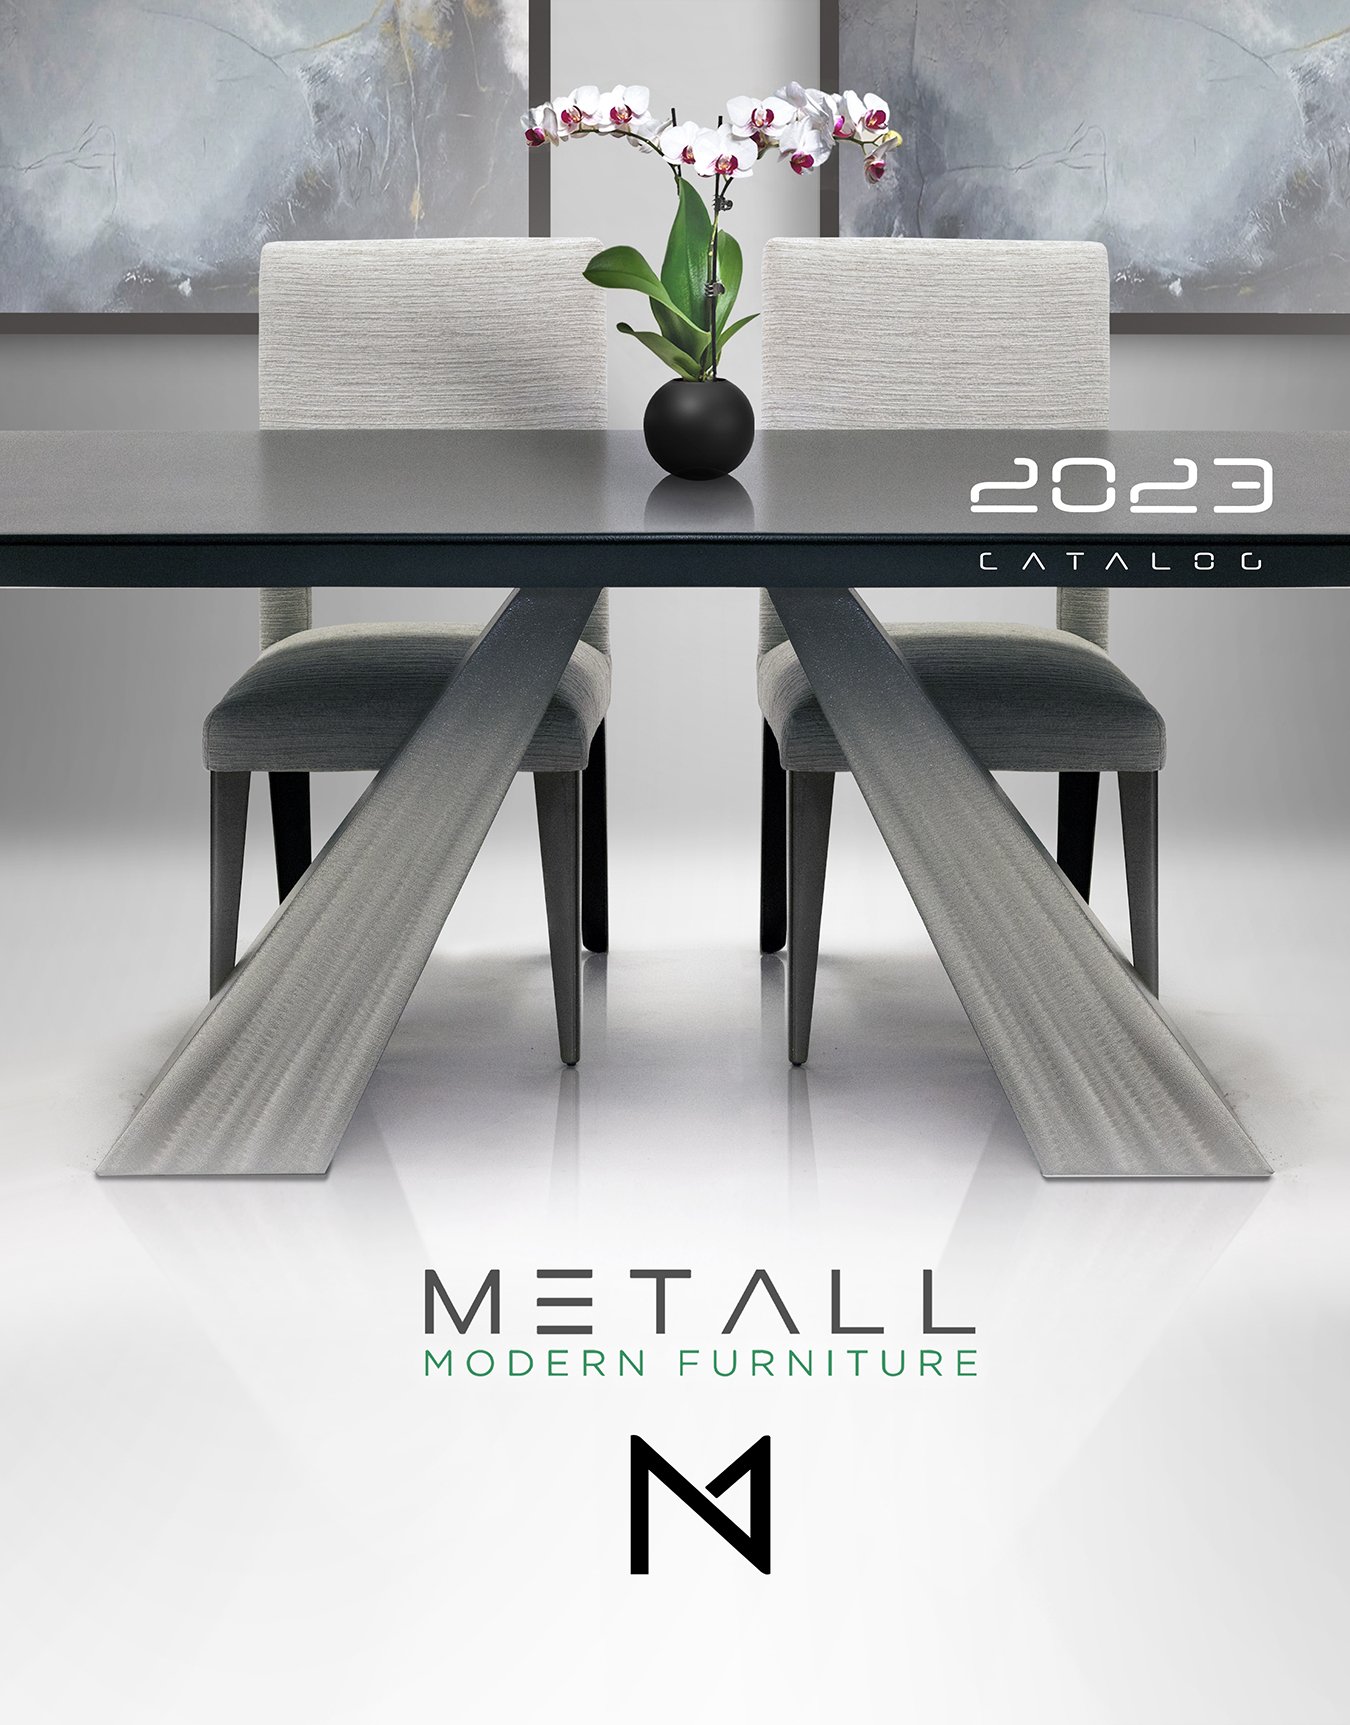 Metall Modern Furniture